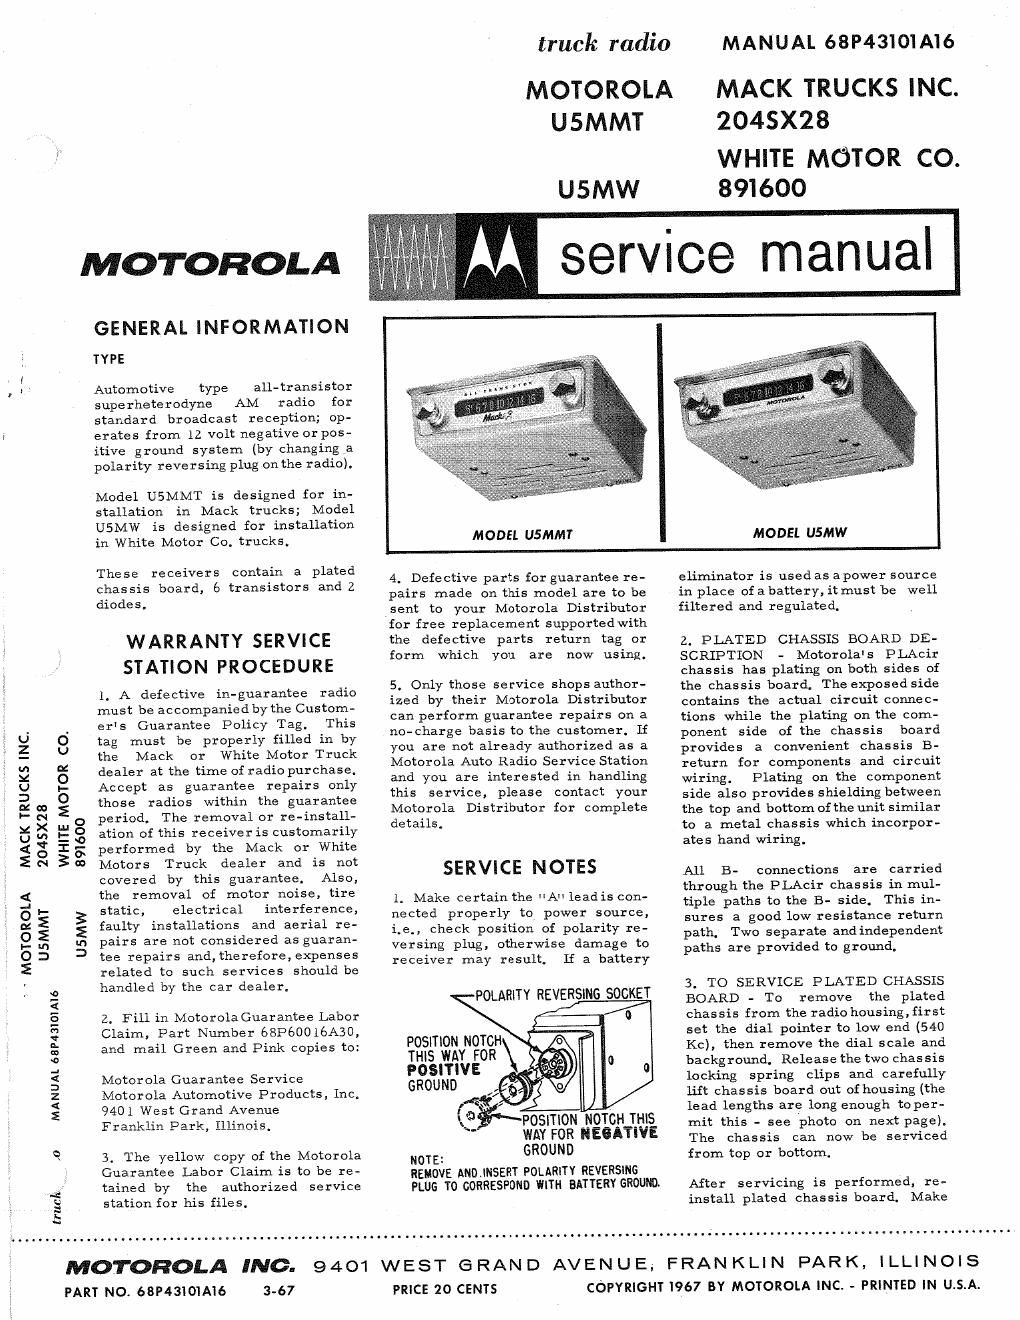 motorola u 5 mmt service manual